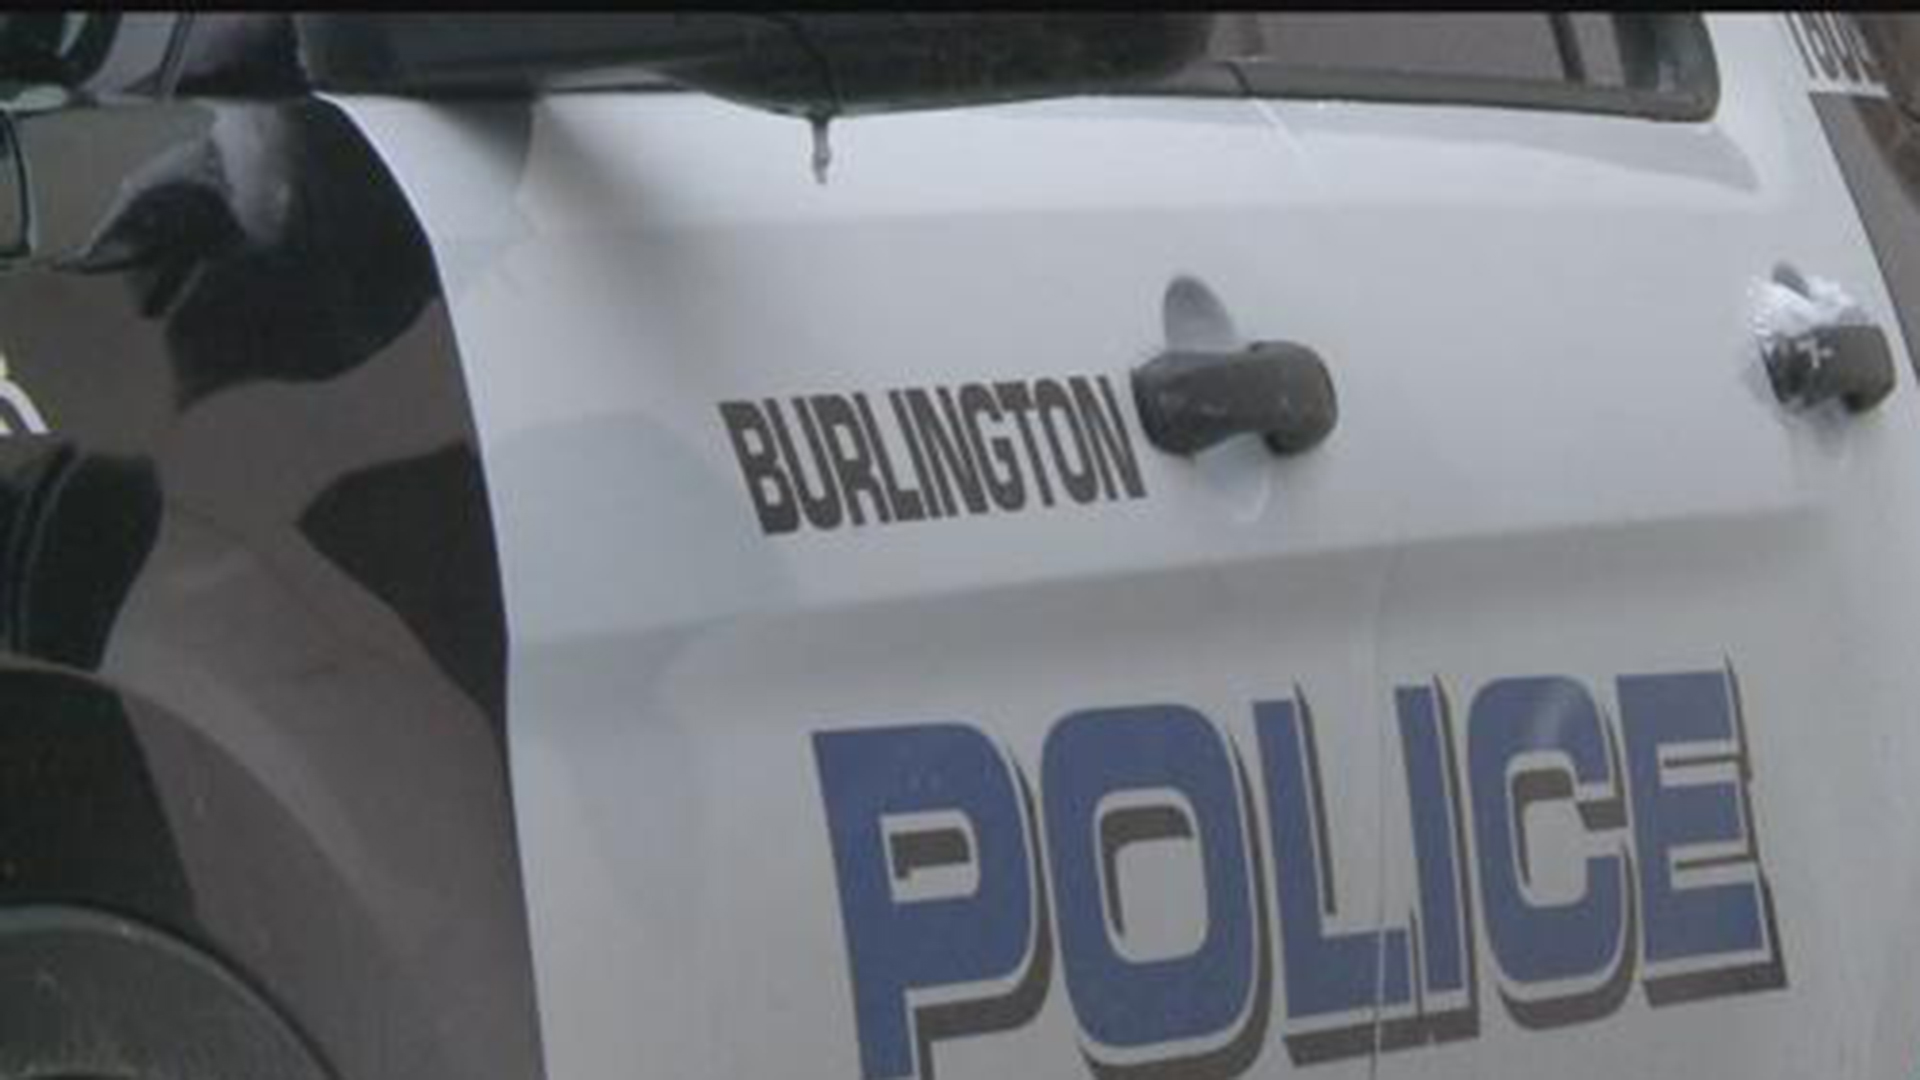 Burlington police get new patch